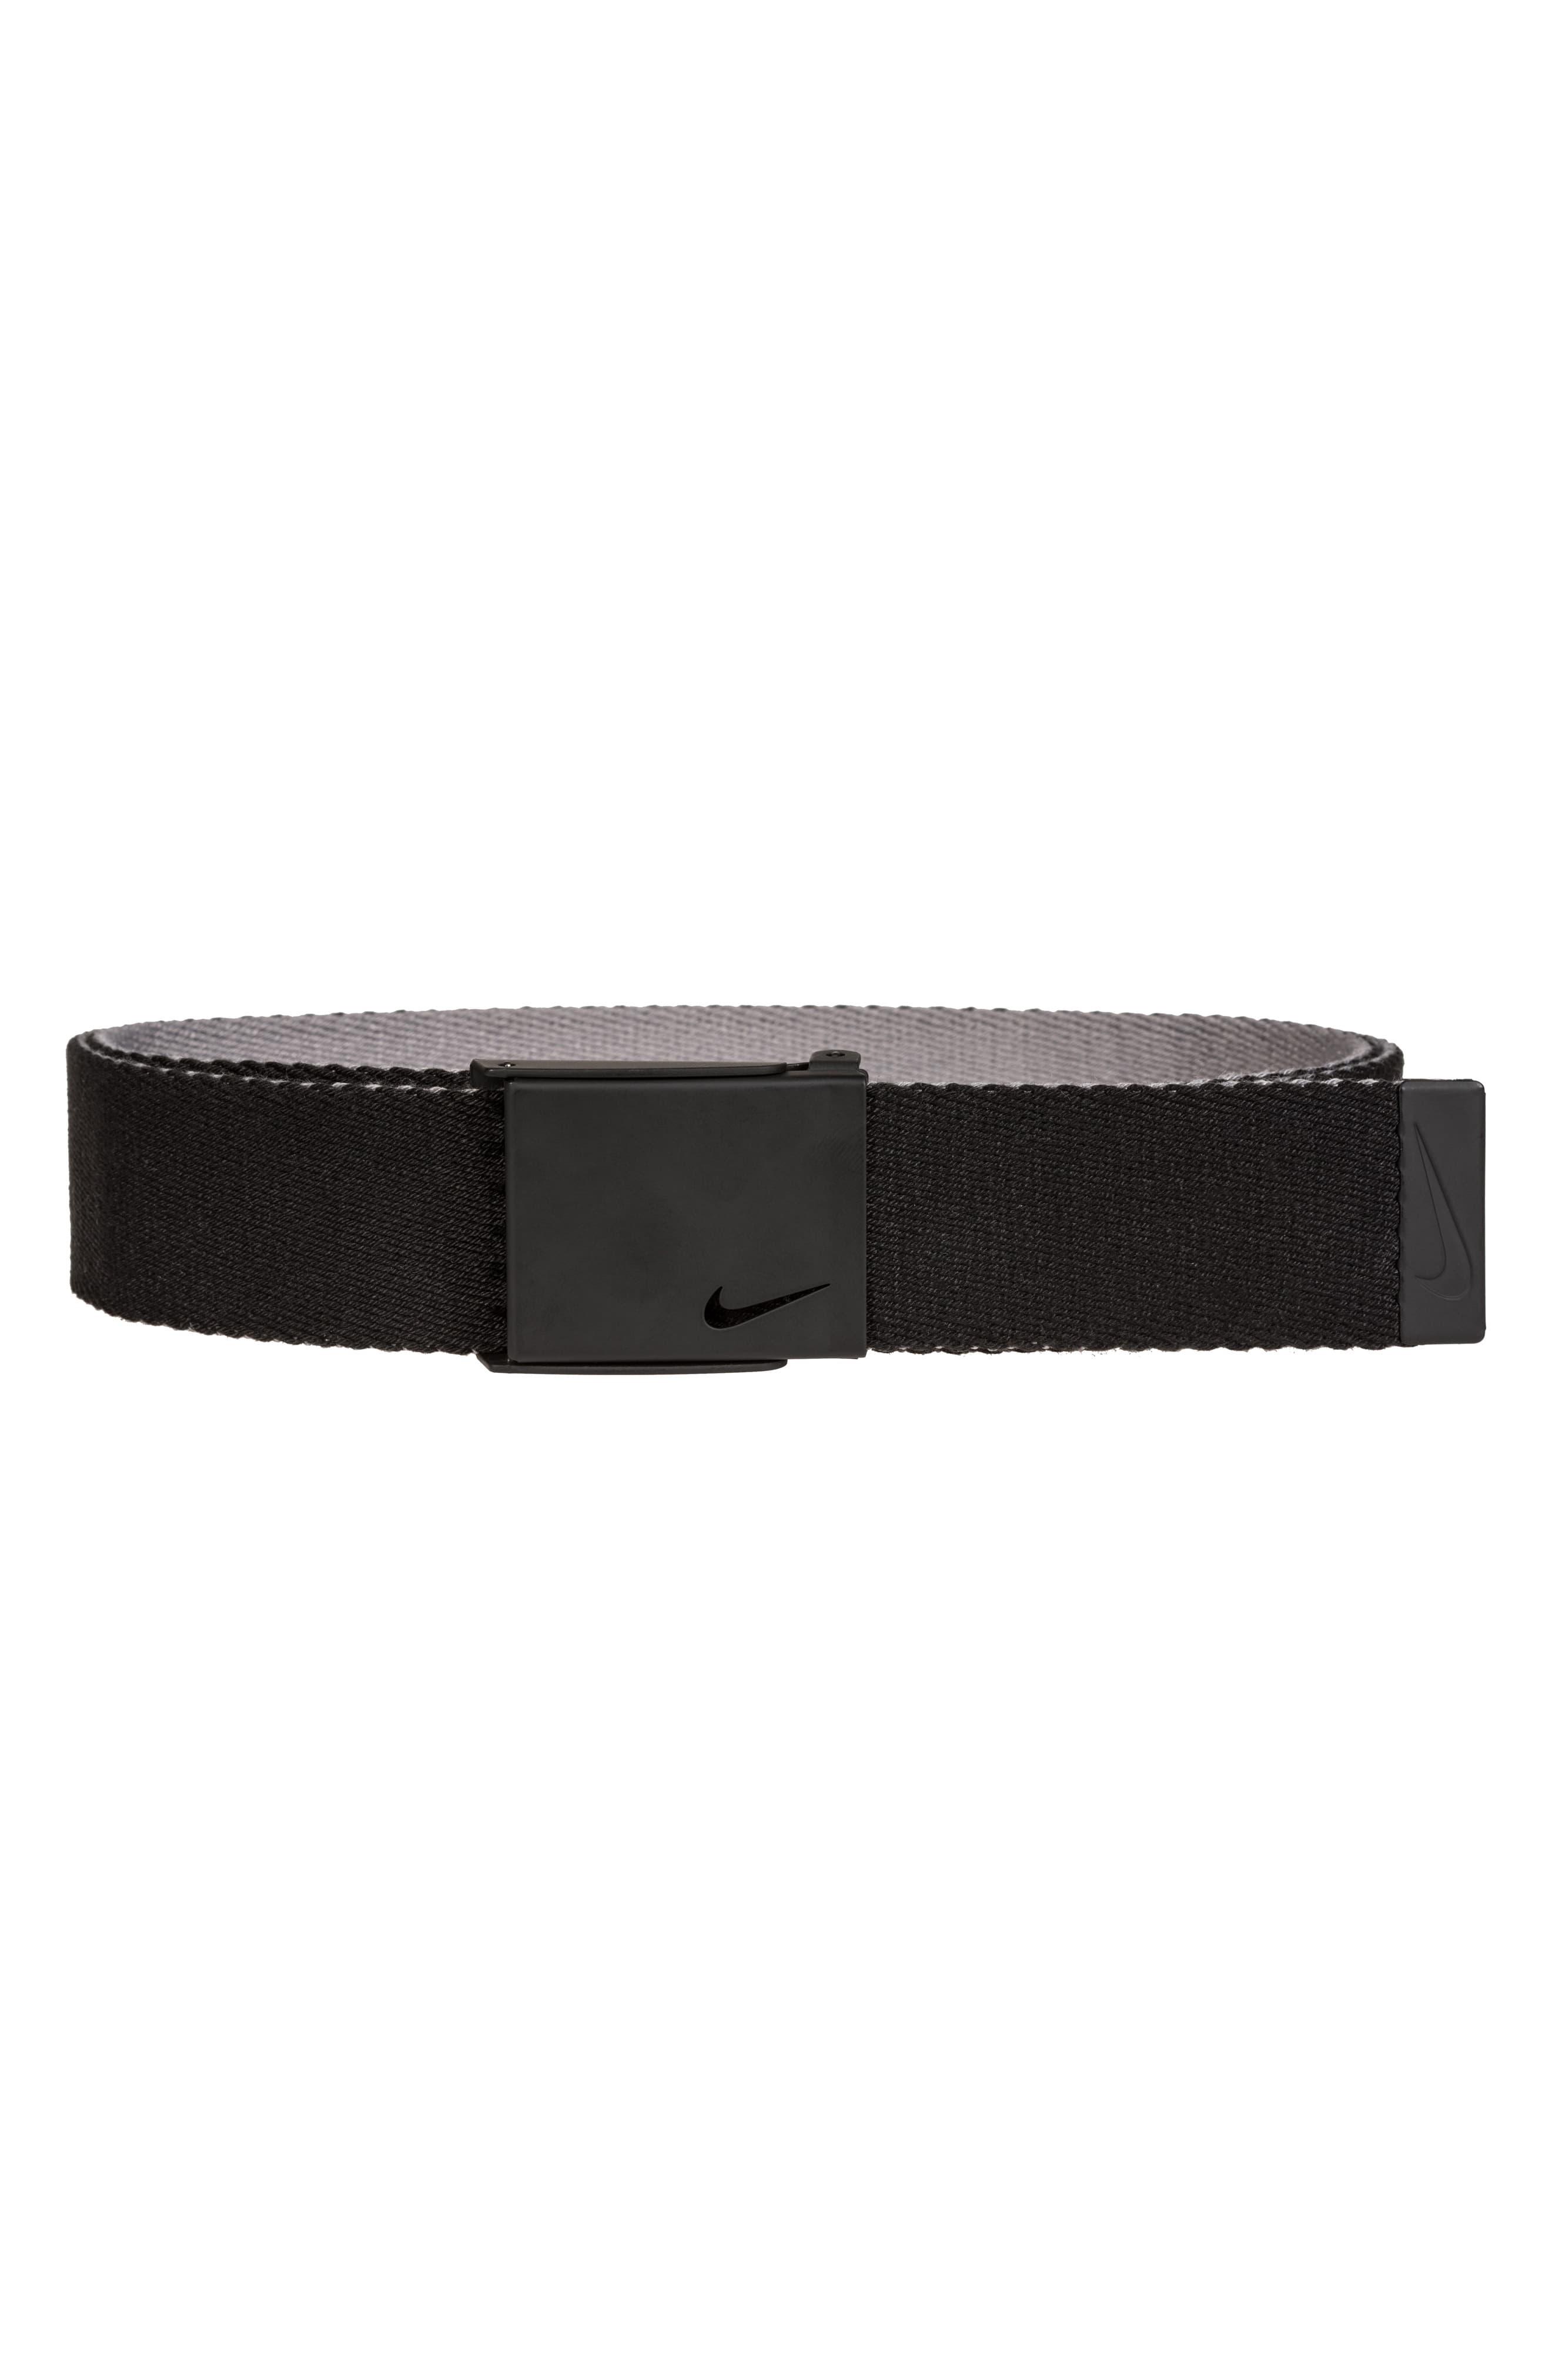 Nike Cotton Essentials Reversible Webbed Belt in Black/ Charcoal (Black ...